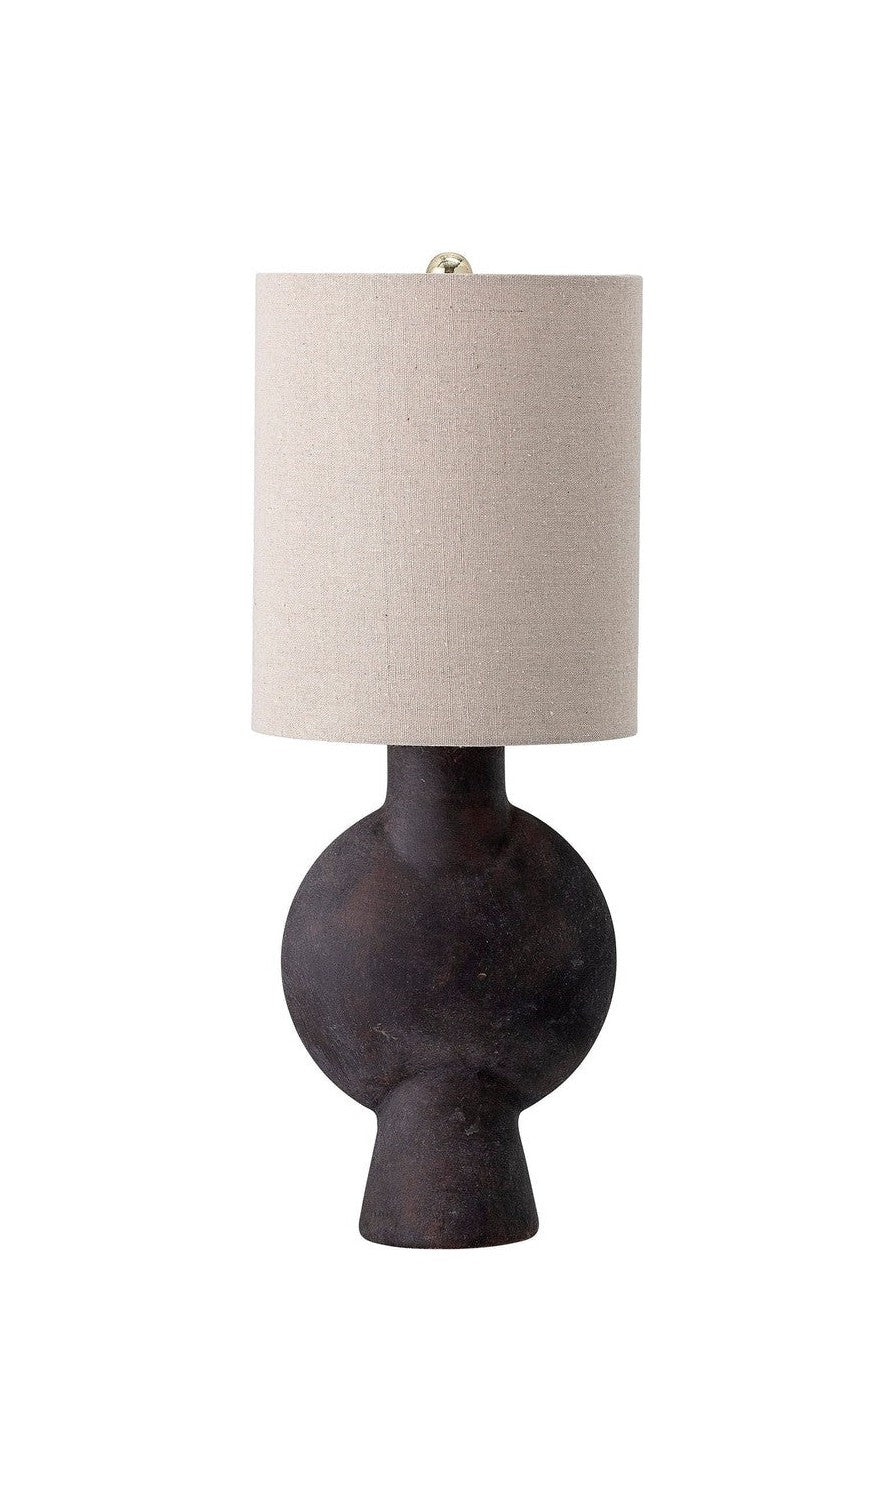 Lampe de table de Bloomingville Sergio, marron, terre cuite